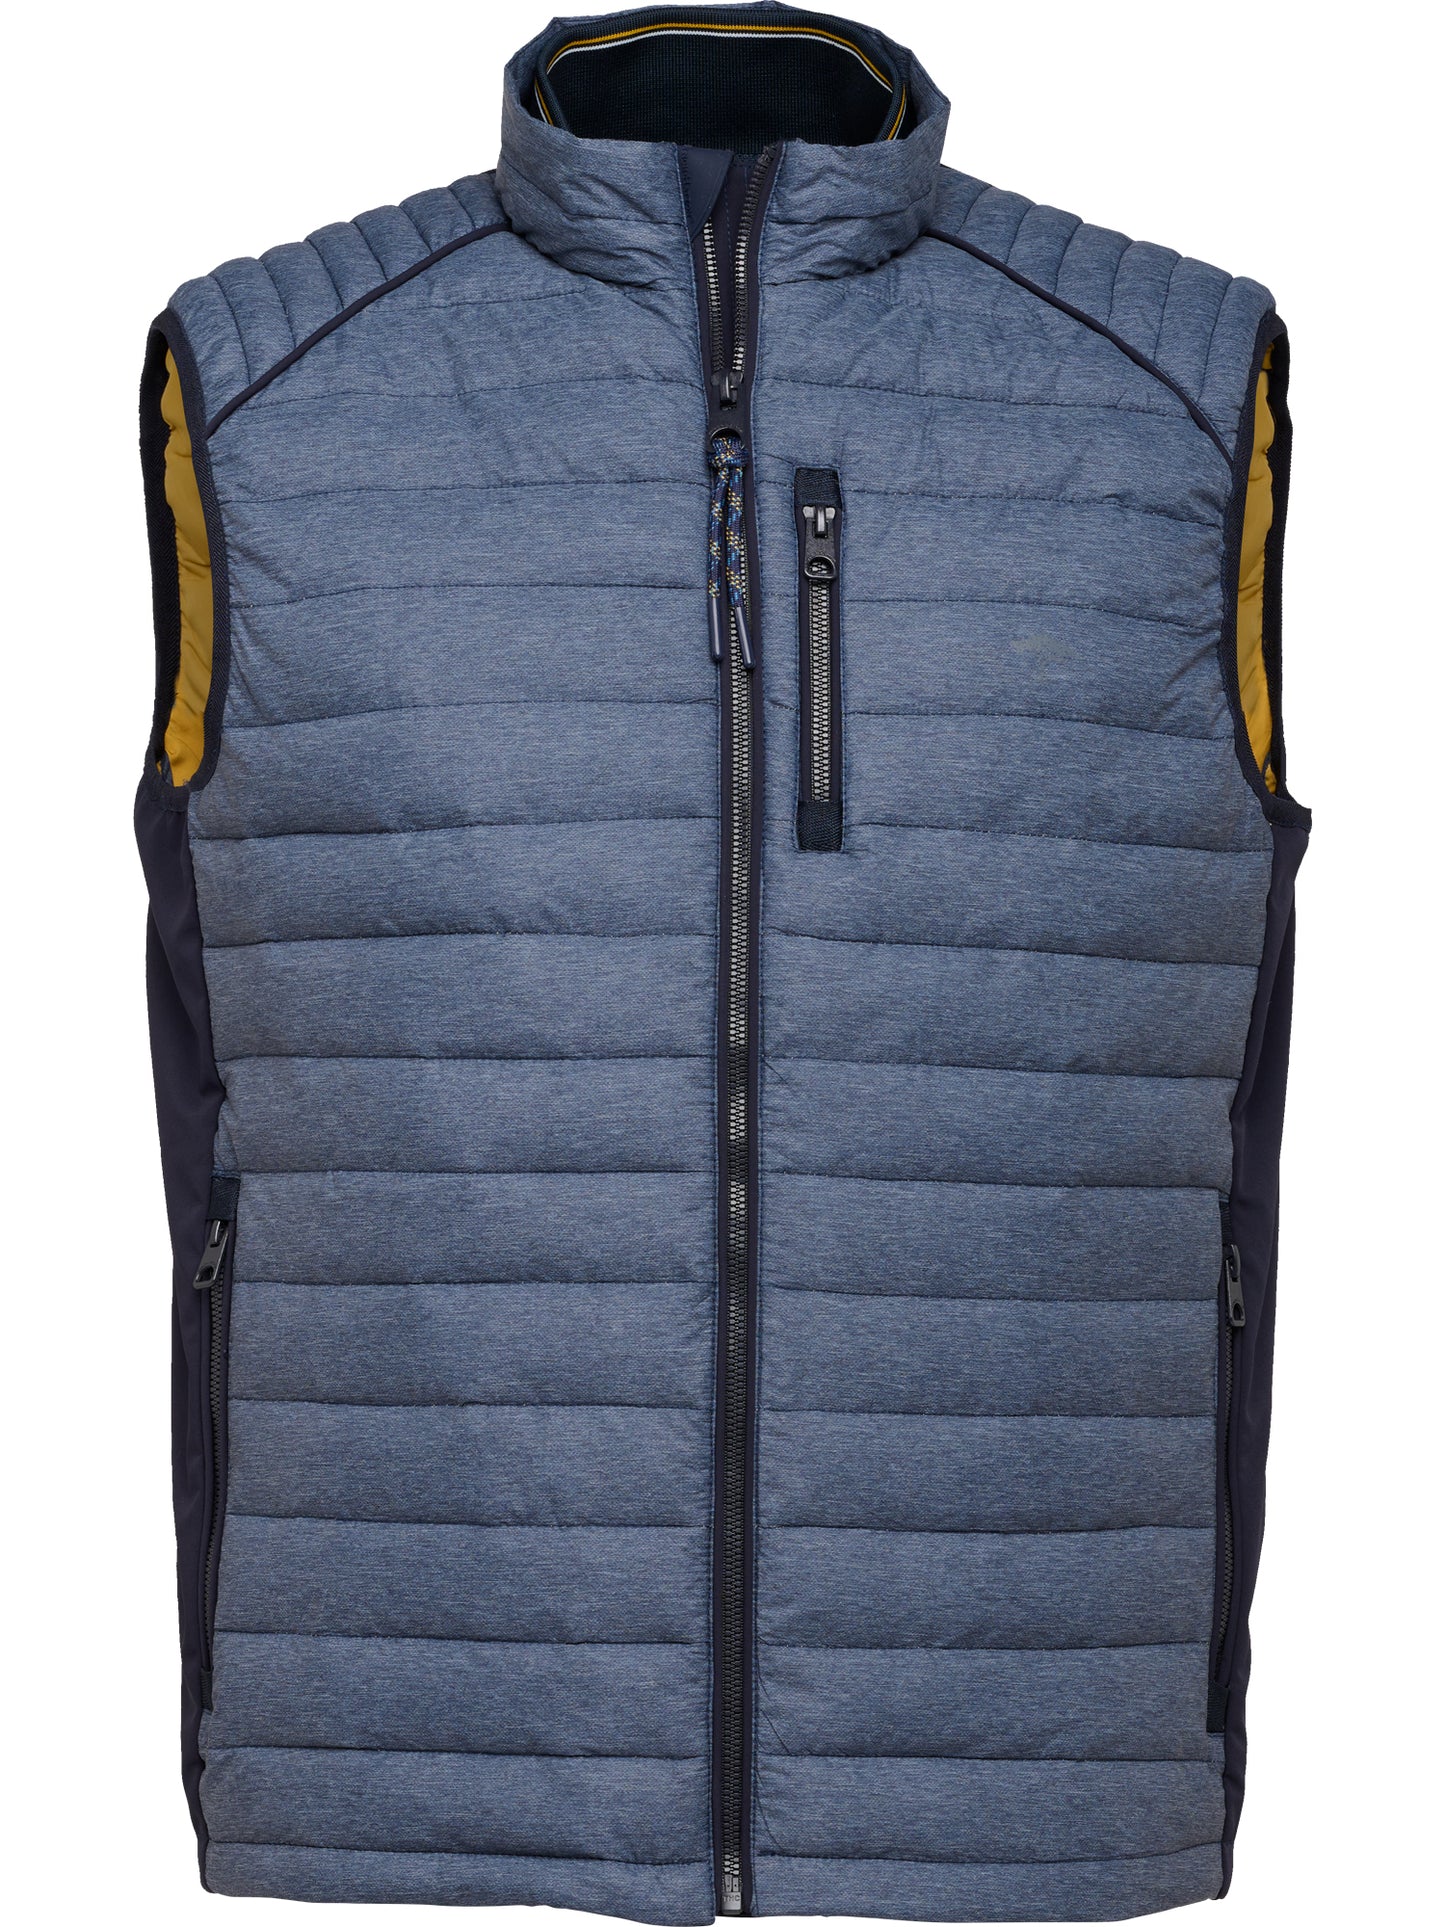 Fynch-Hatton Jacket in Regular fit.   The Downtouch Lightweight Vest.